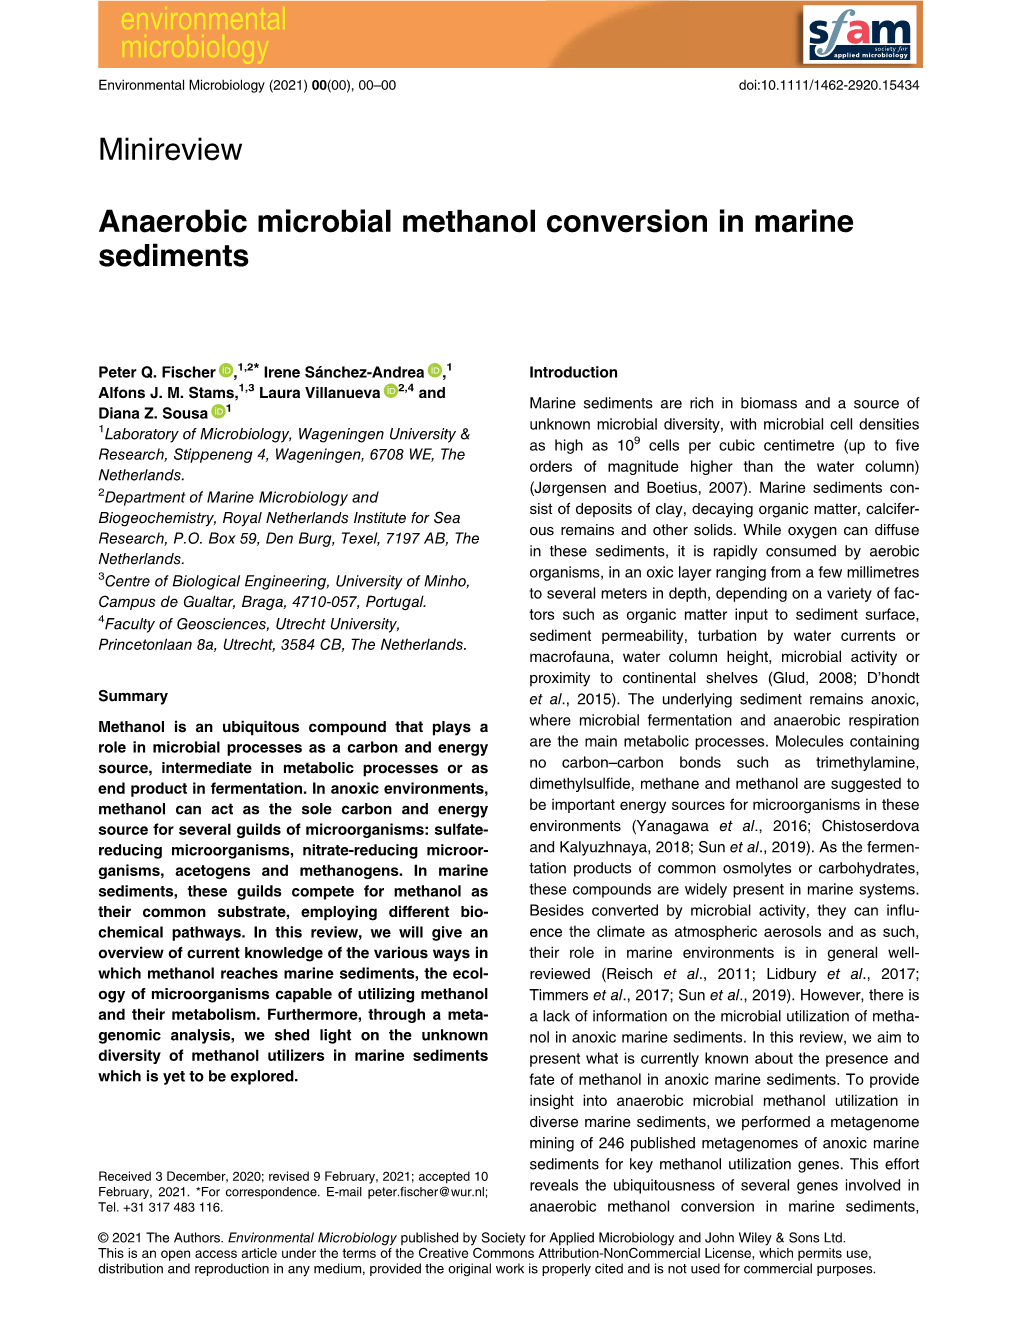 Anaerobic Microbial Methanol Conversion in Marine Sediments